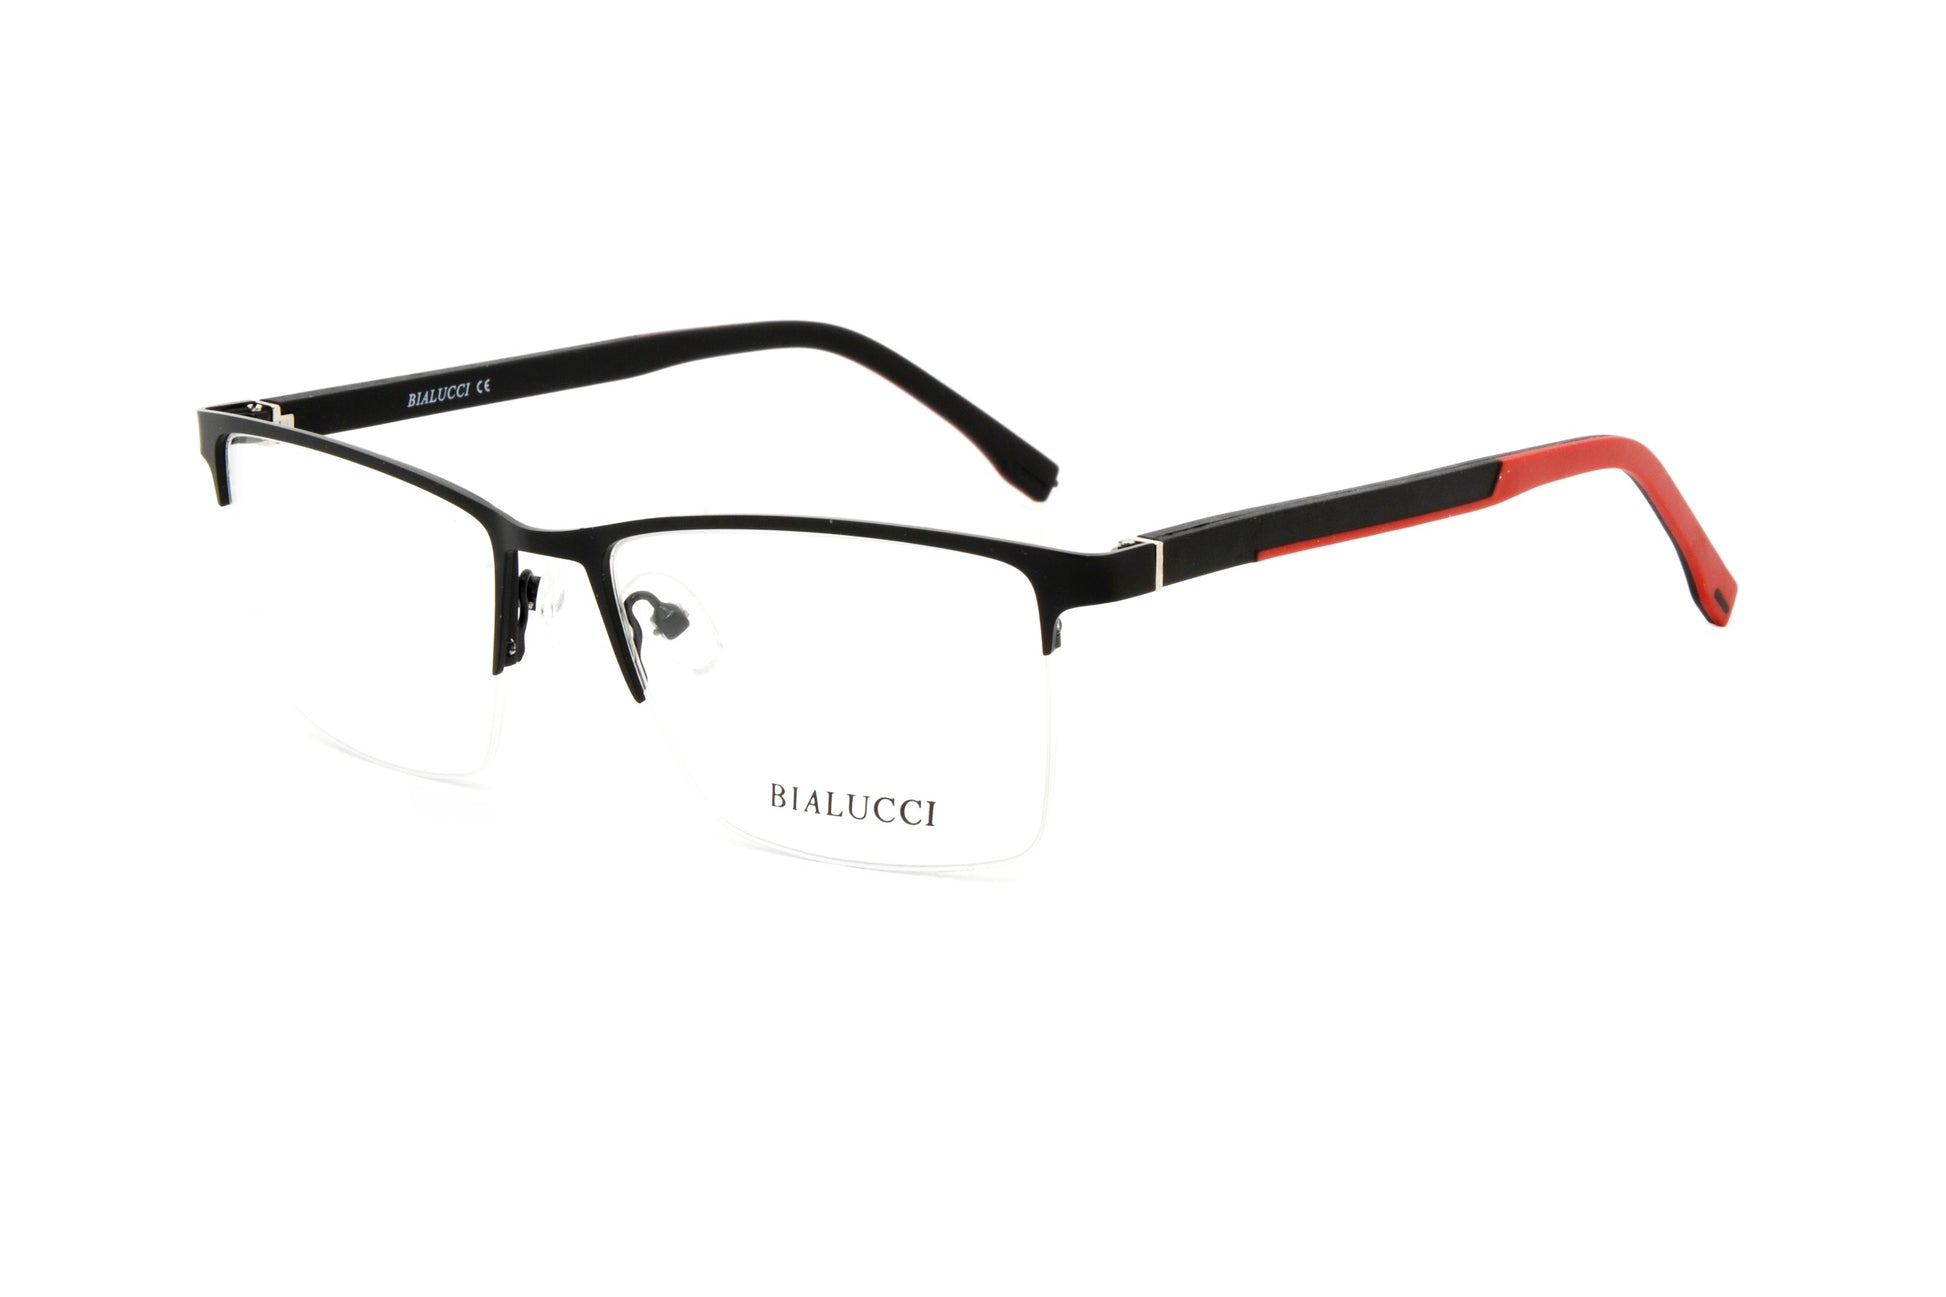 Bialucci eyewear LE6164 C1